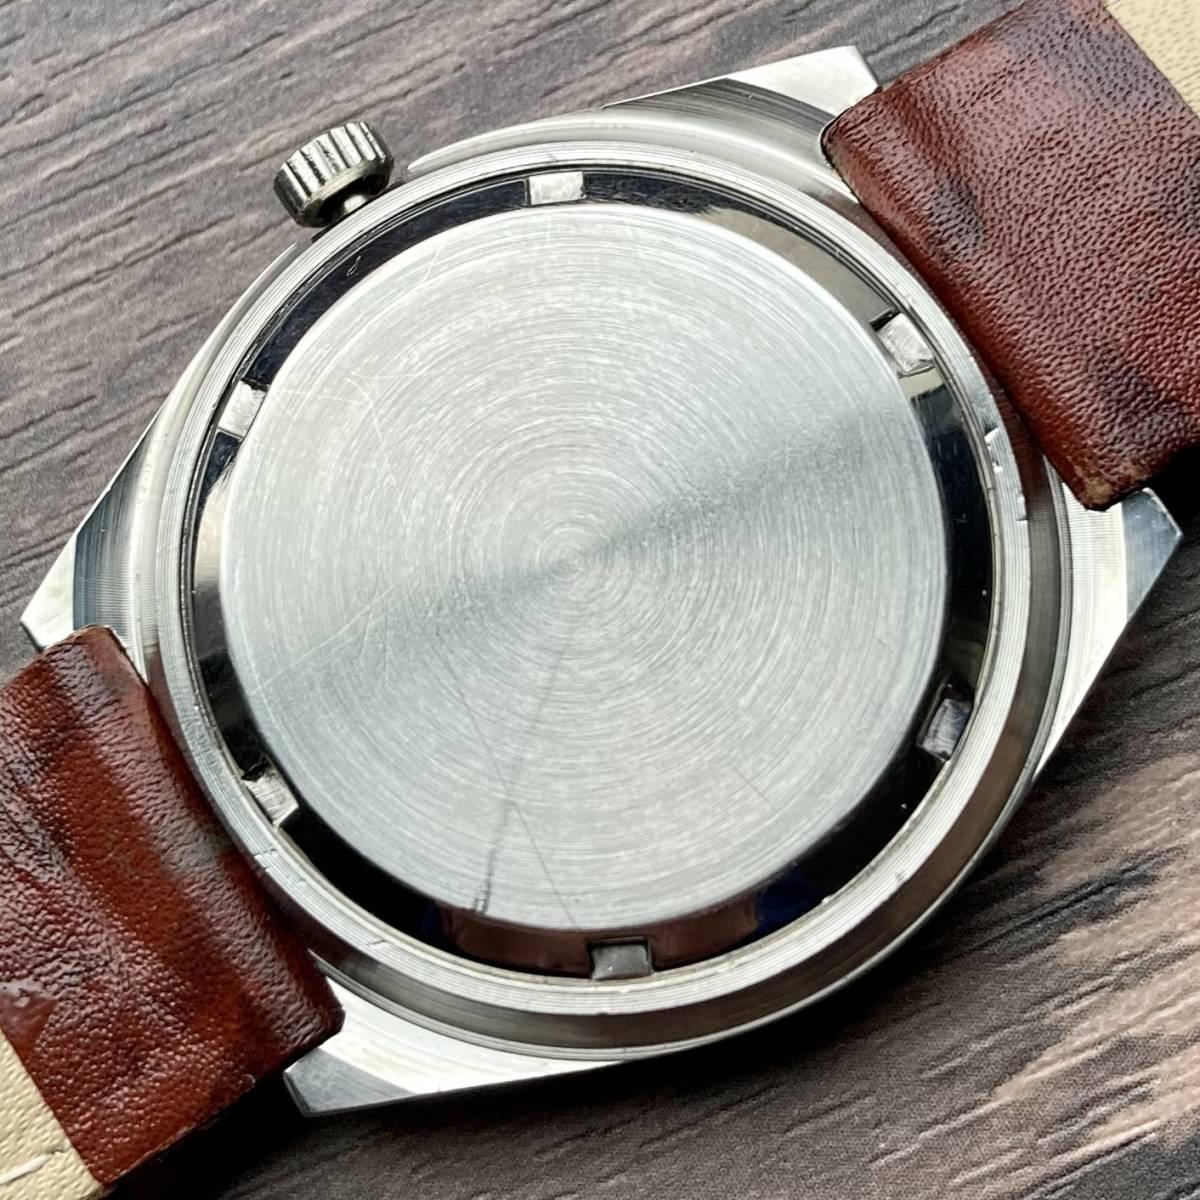 Ulysse Nardin Wristwatch Antique 1960s Self-Winding Men's 35mm Vintage Watch - Murphy Johnson Watches Co.